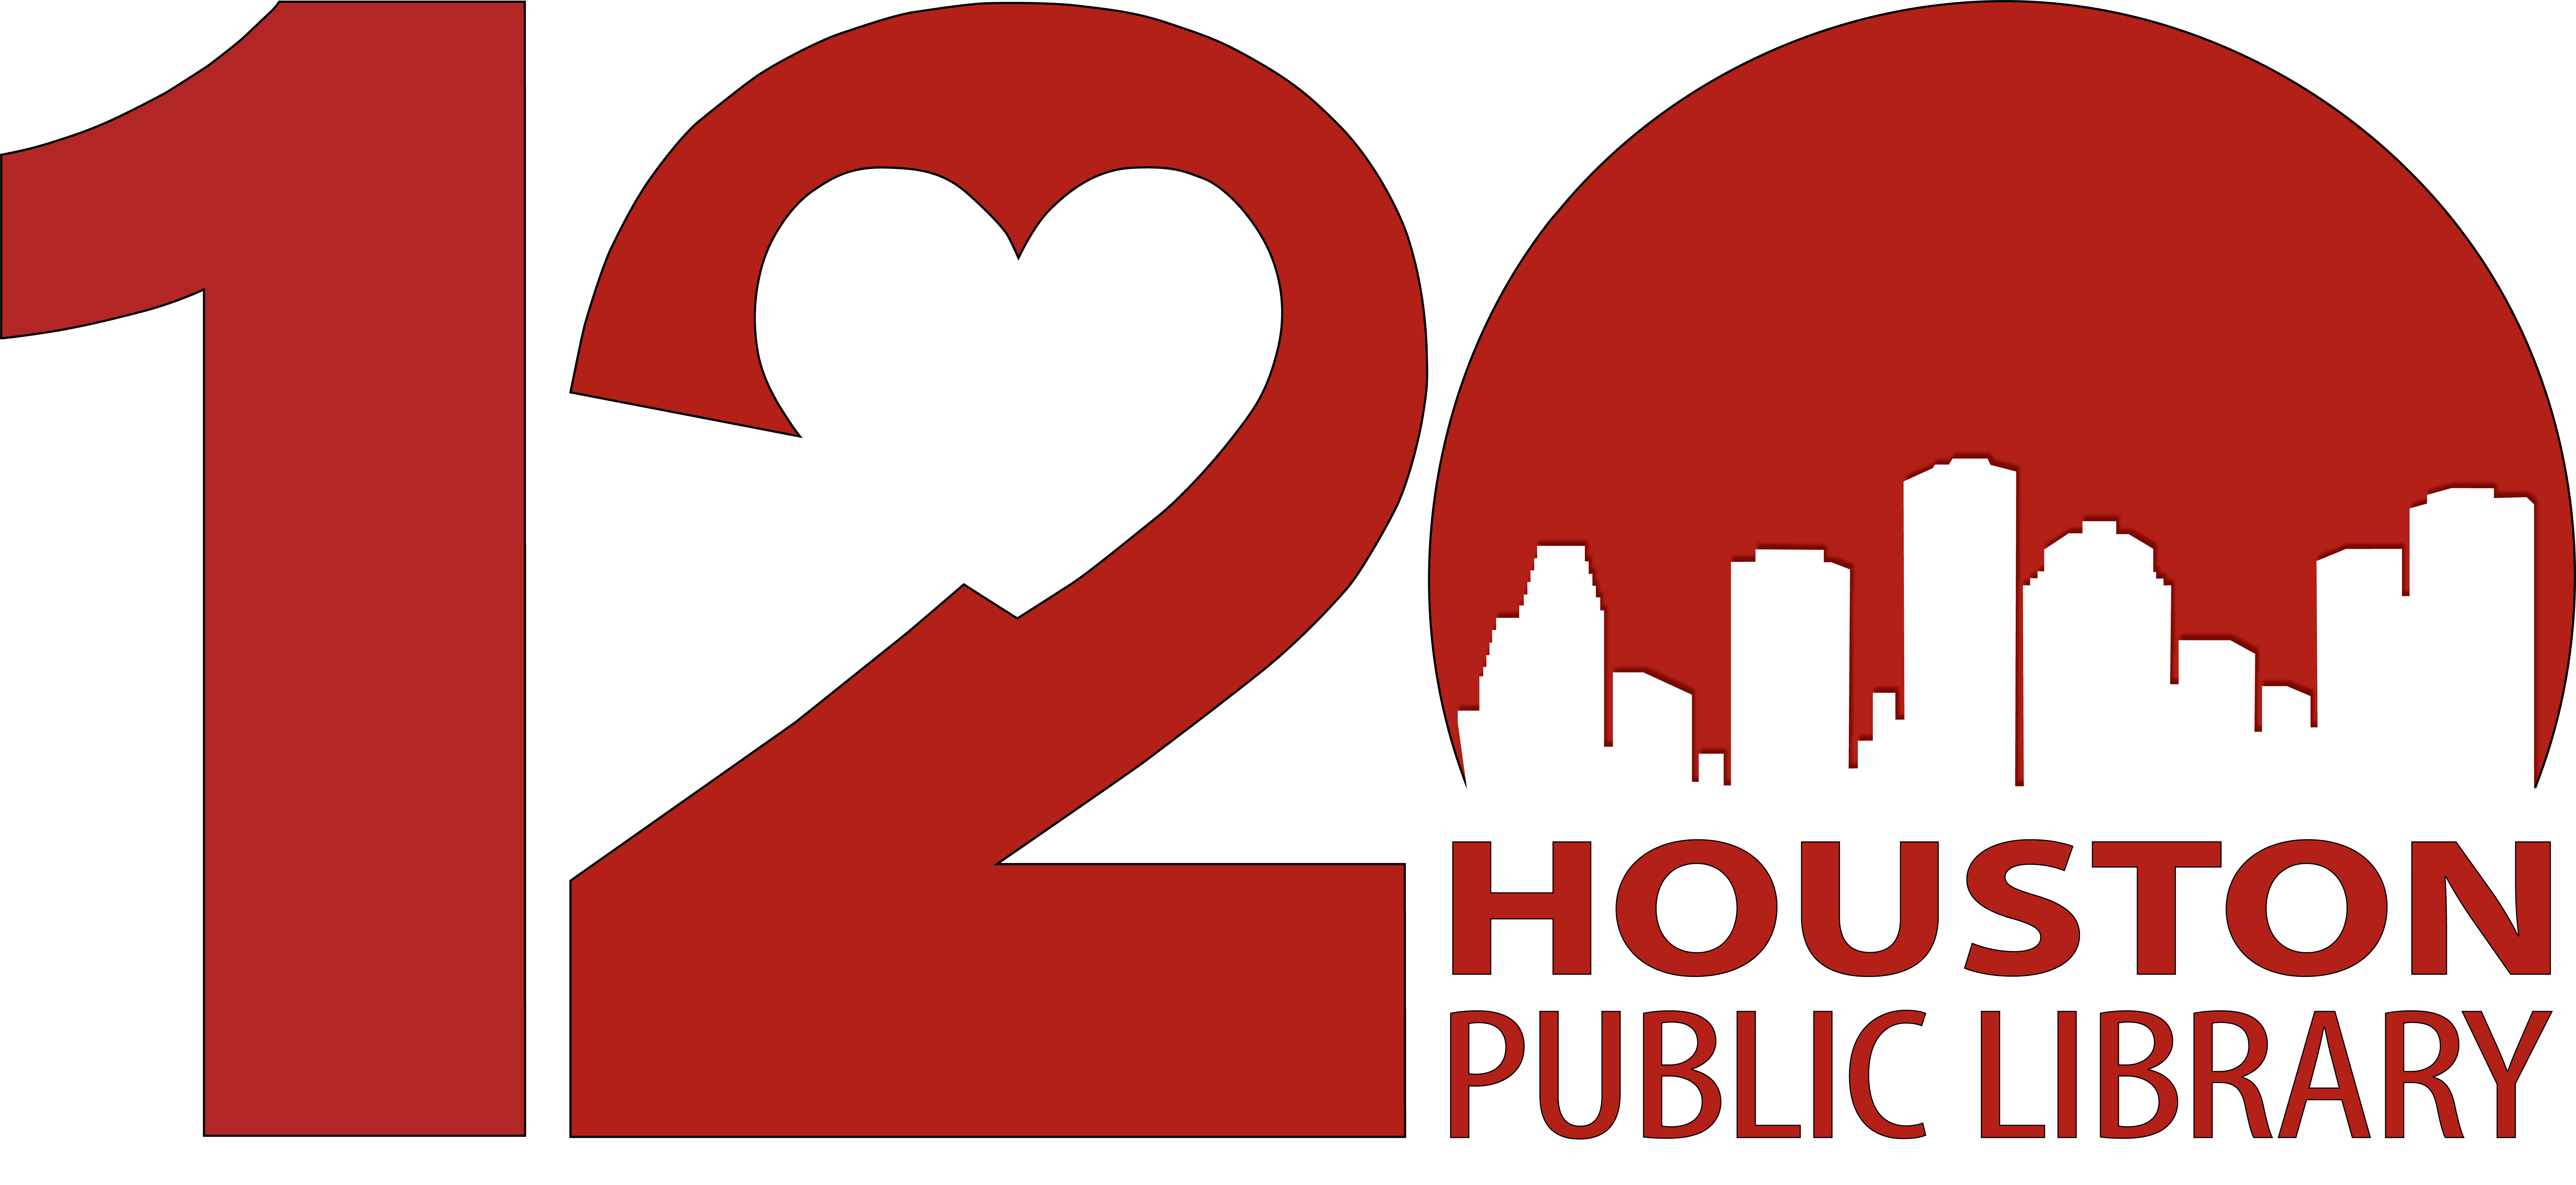 Houston Public Library logo